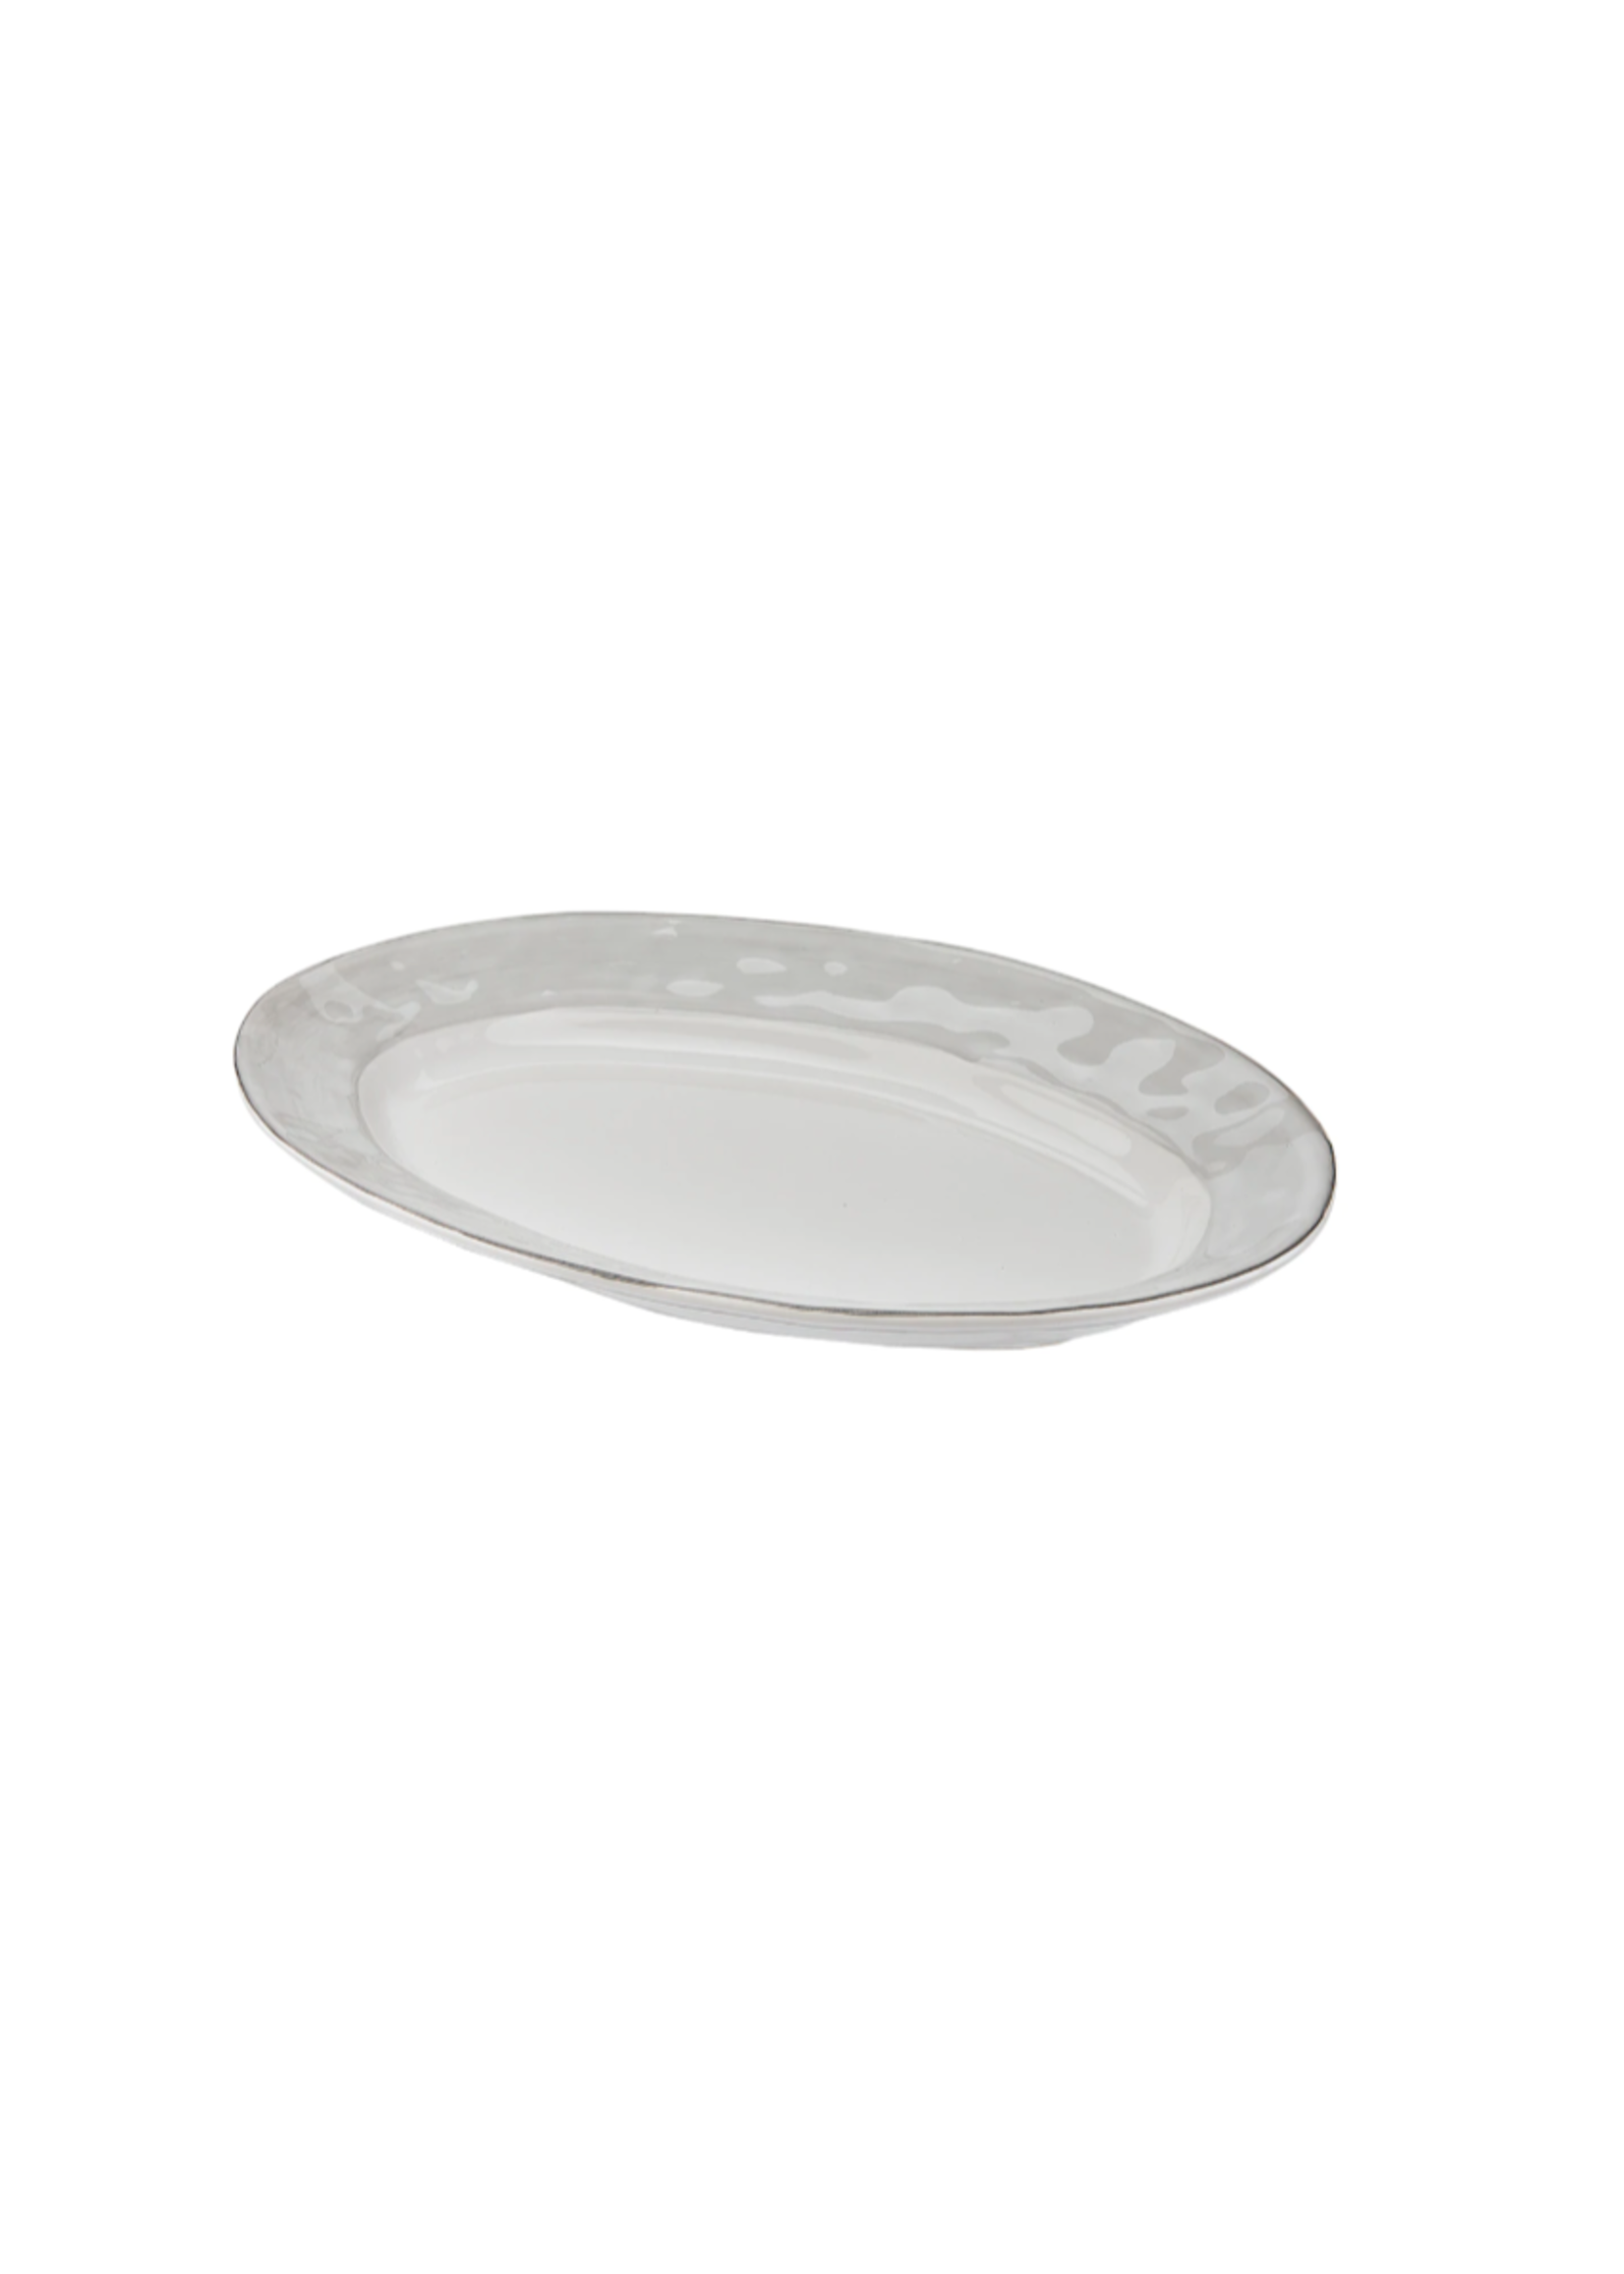 Skyros Designs Azores Greige Shimmer Small Oval Platter